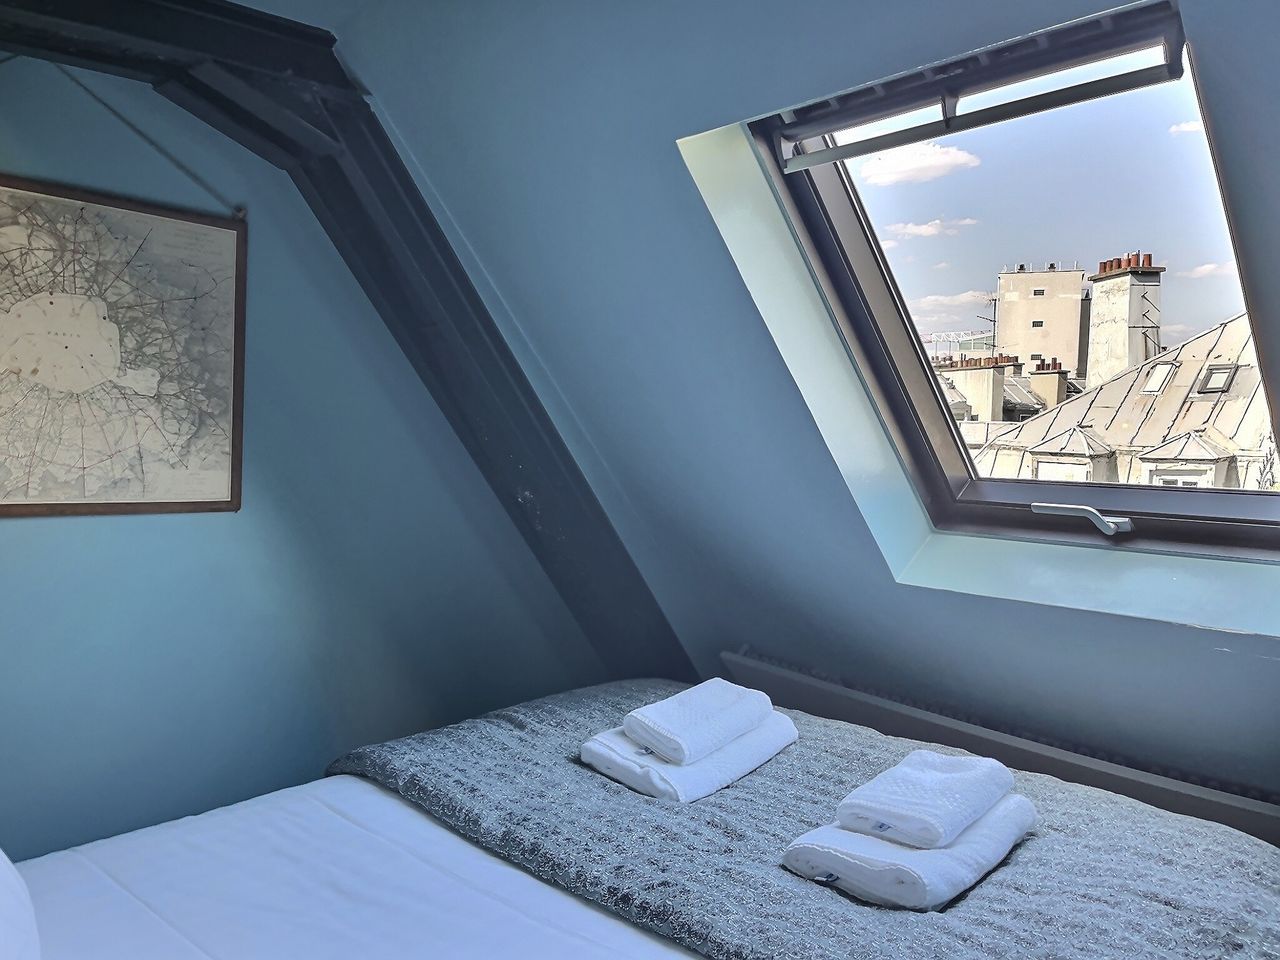 Chic Furnished Apartment - 2 Rooms - 50m2 - Grands Boulevards - Lafayette - 75009 Paris